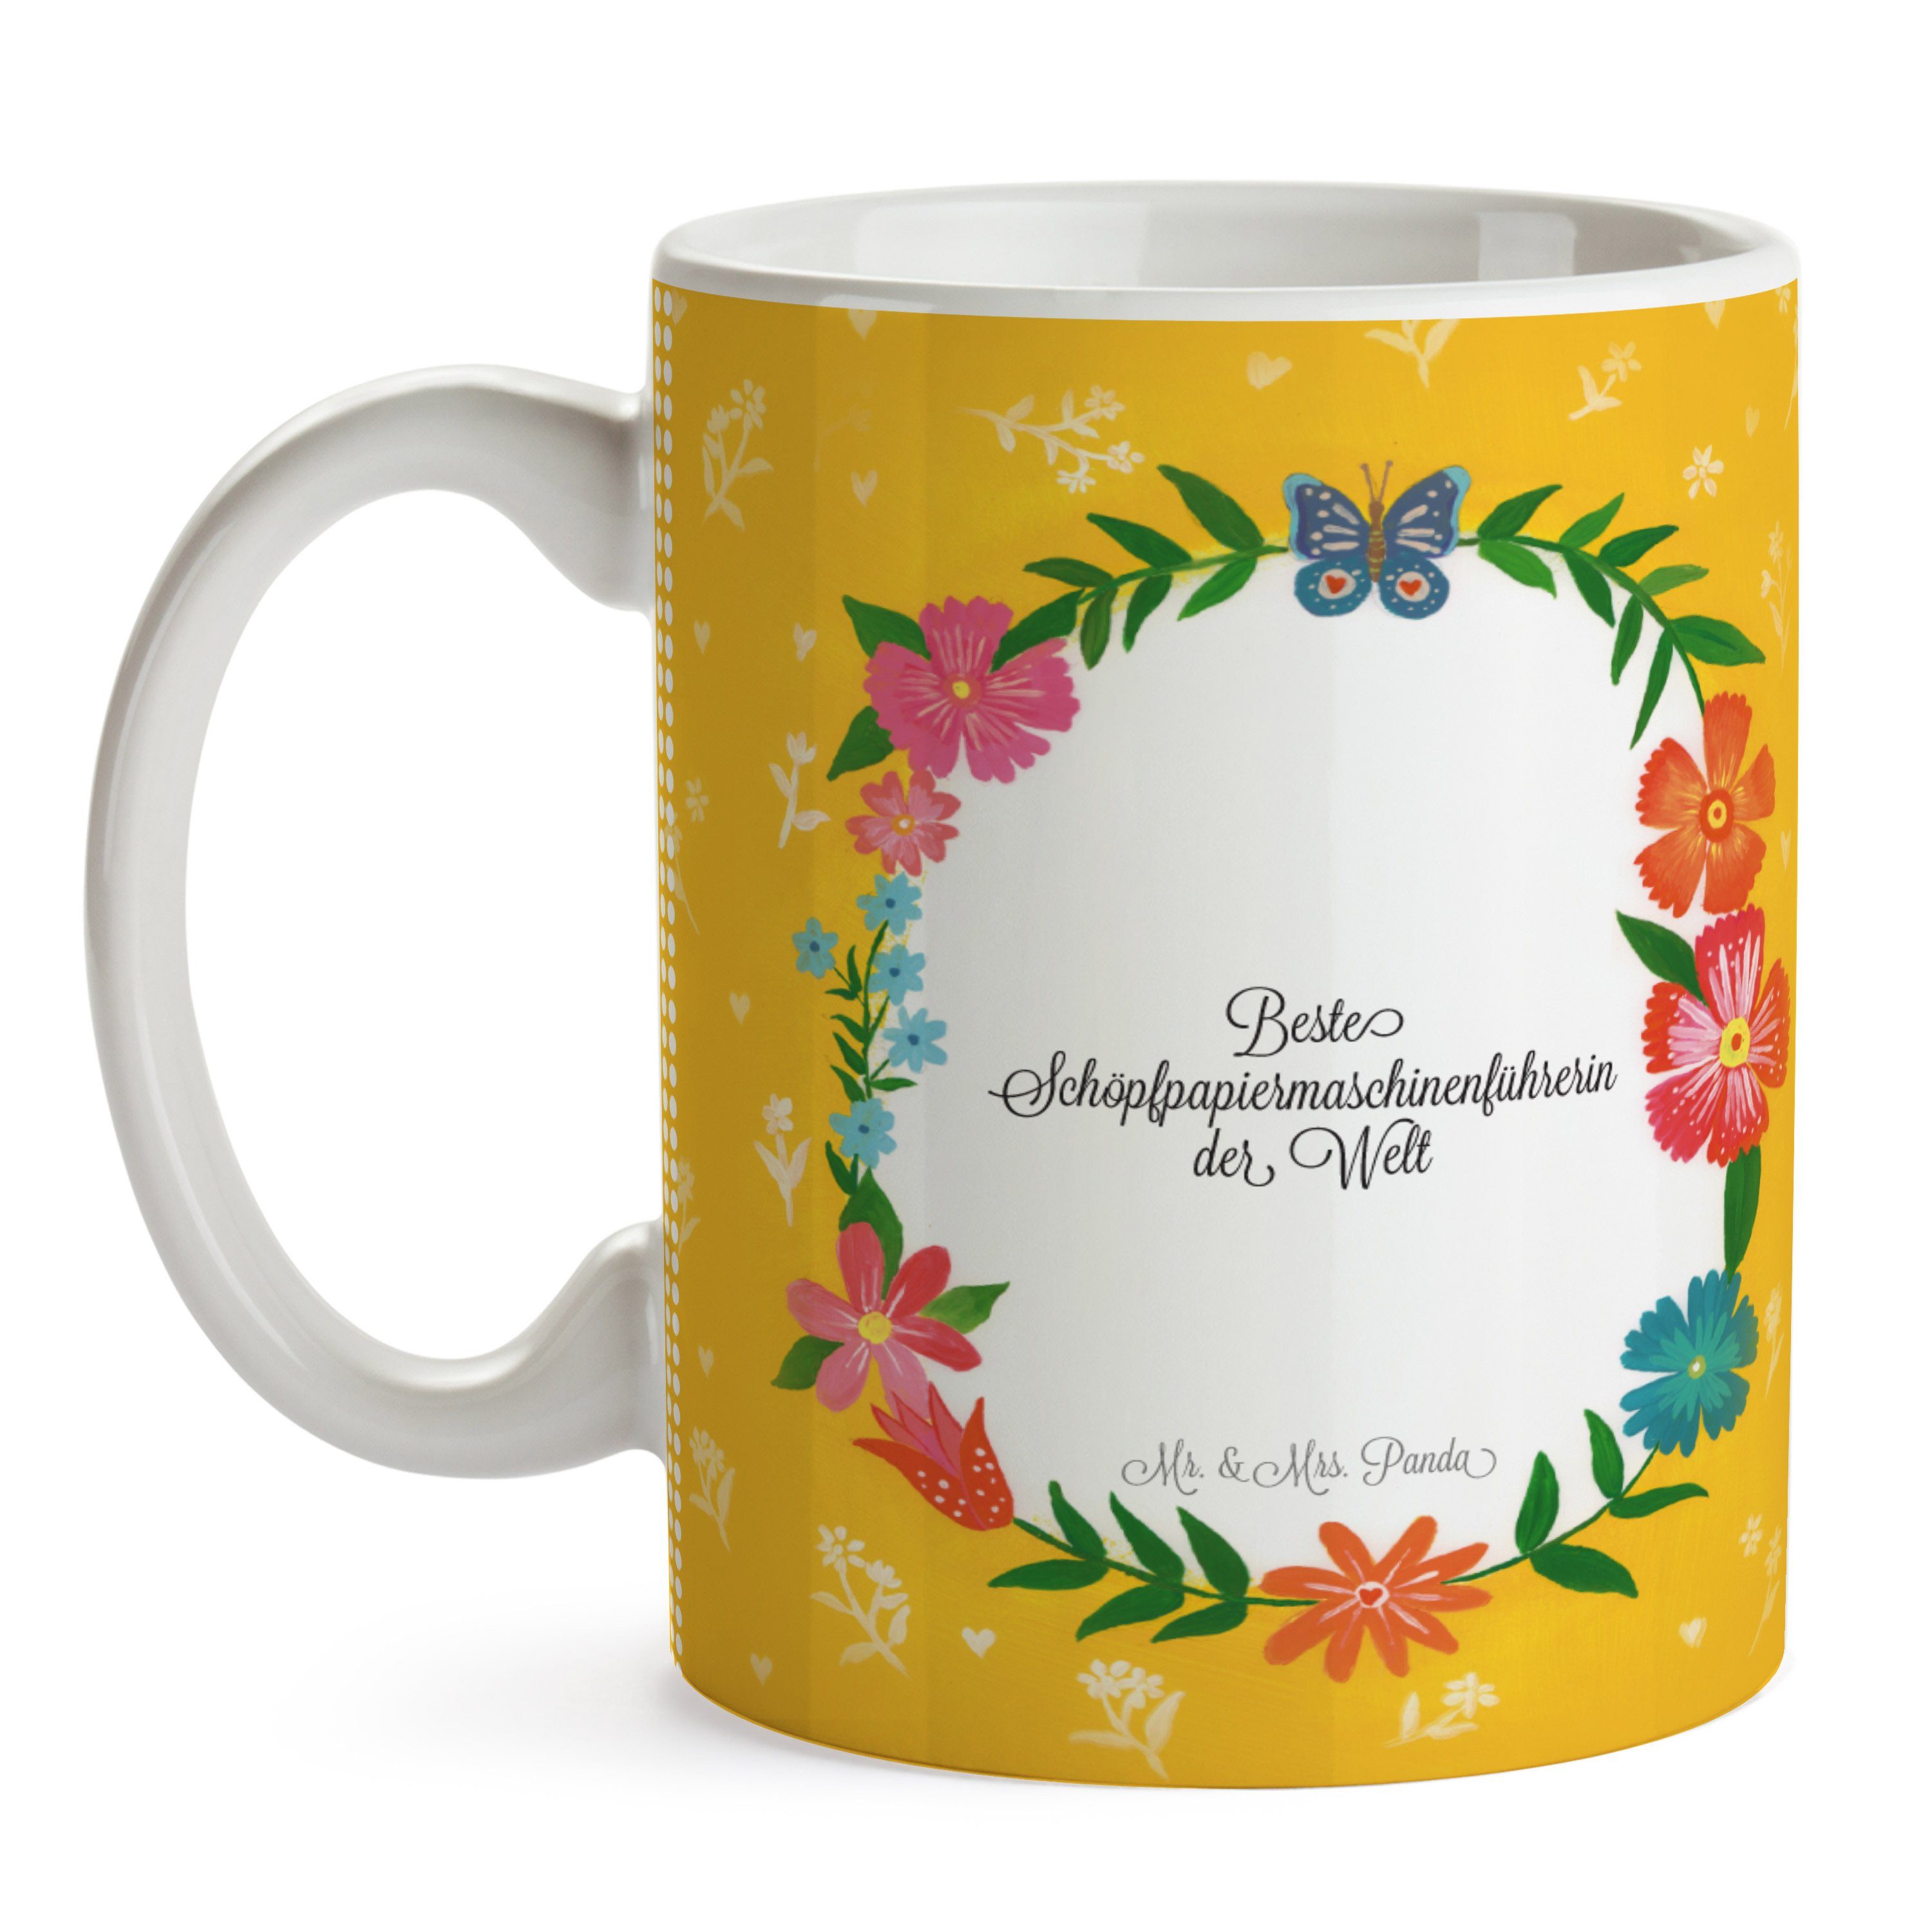 Kaffee, Keramik Teebecher, & Geschenk, Mr. Schöpfpapiermaschinenführerin Panda Mrs. Tasse Schenken, -